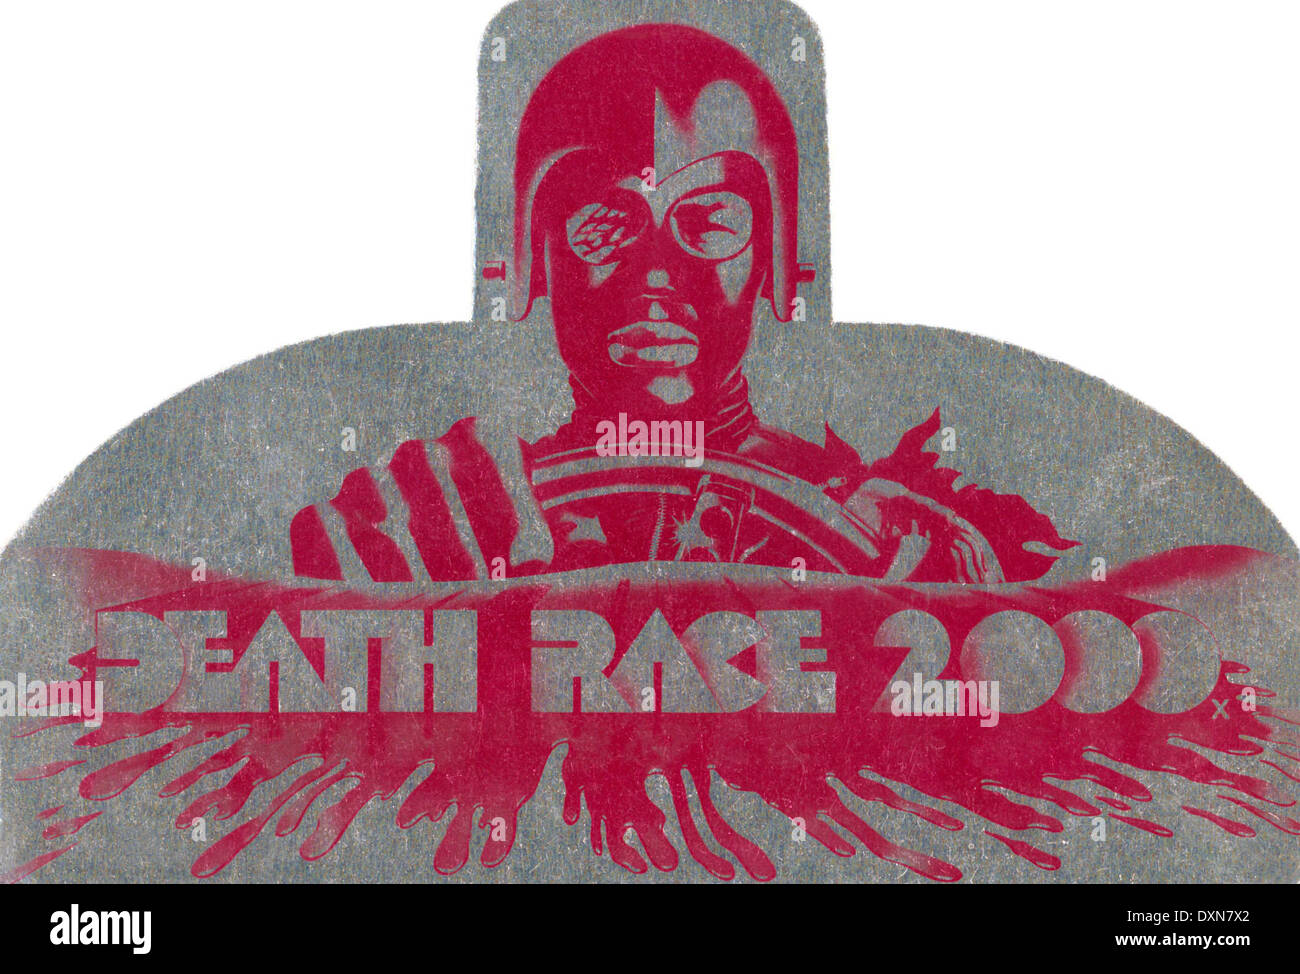 DEATH RACE 2000 Stock Photo